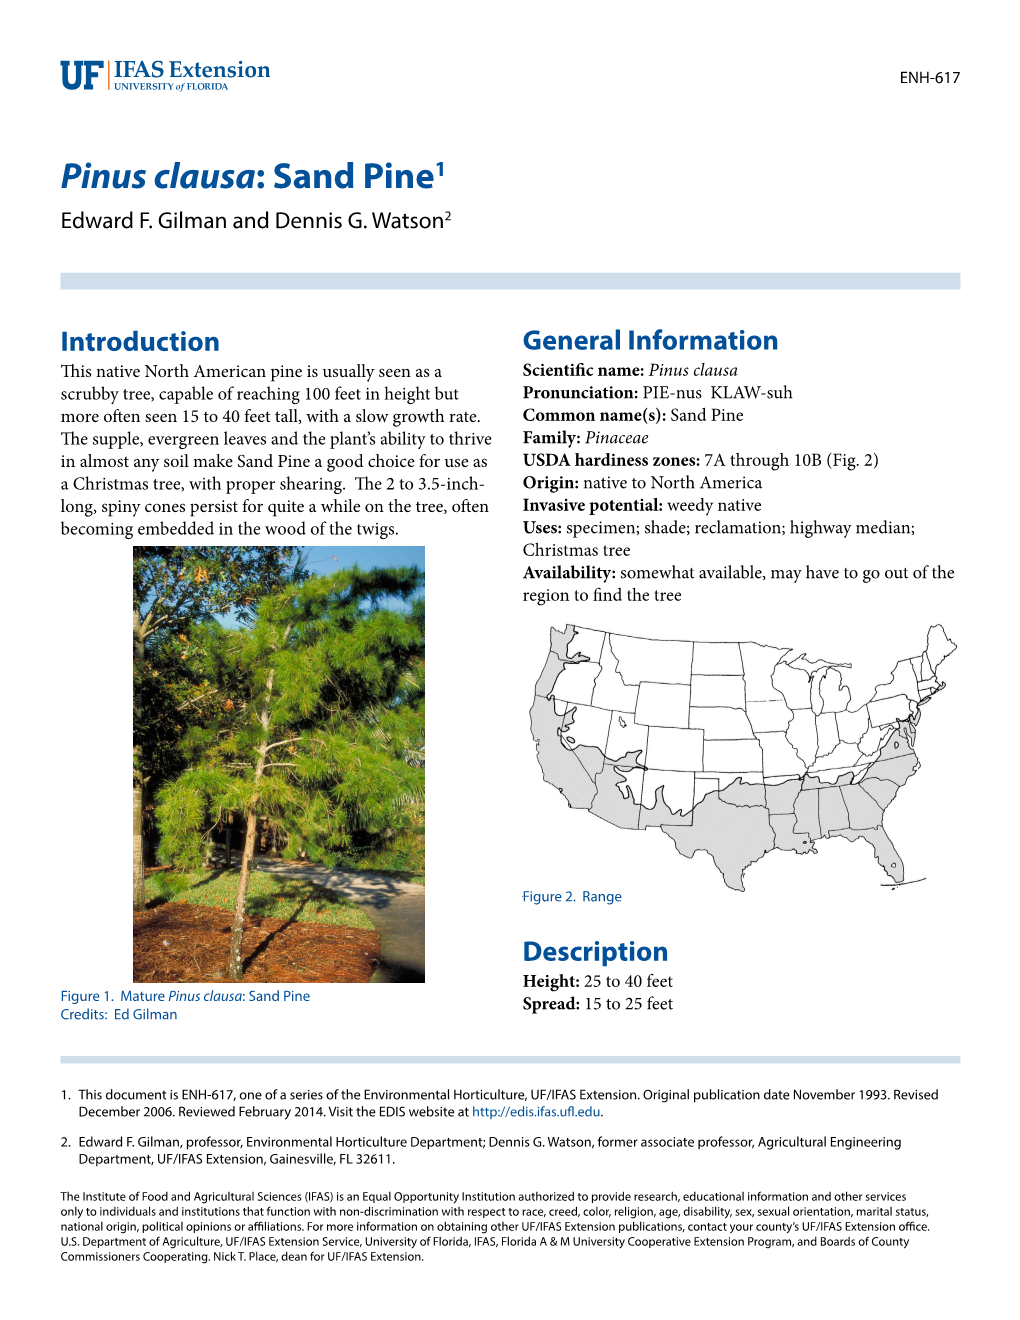 Pinus Clausa: Sand Pine1 Edward F